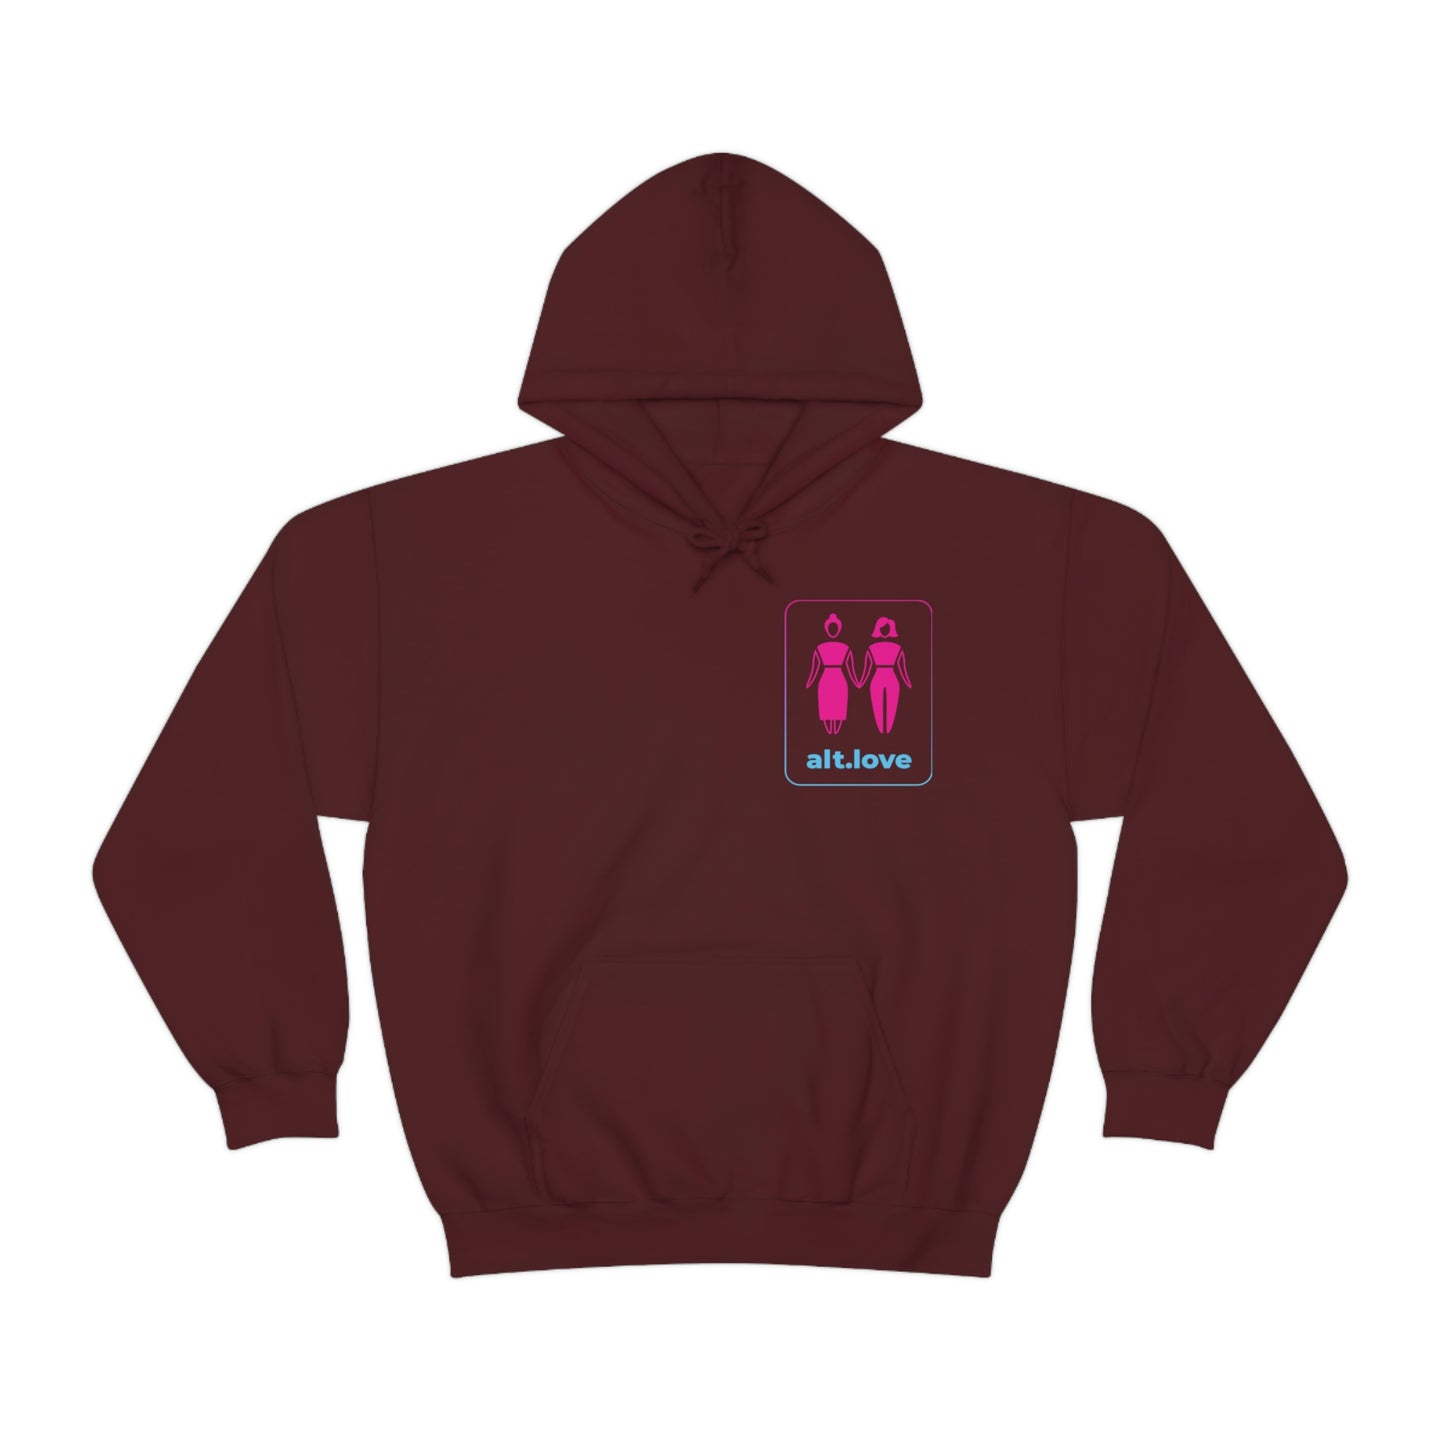 alt.love (female) Hooded Sweatshirt